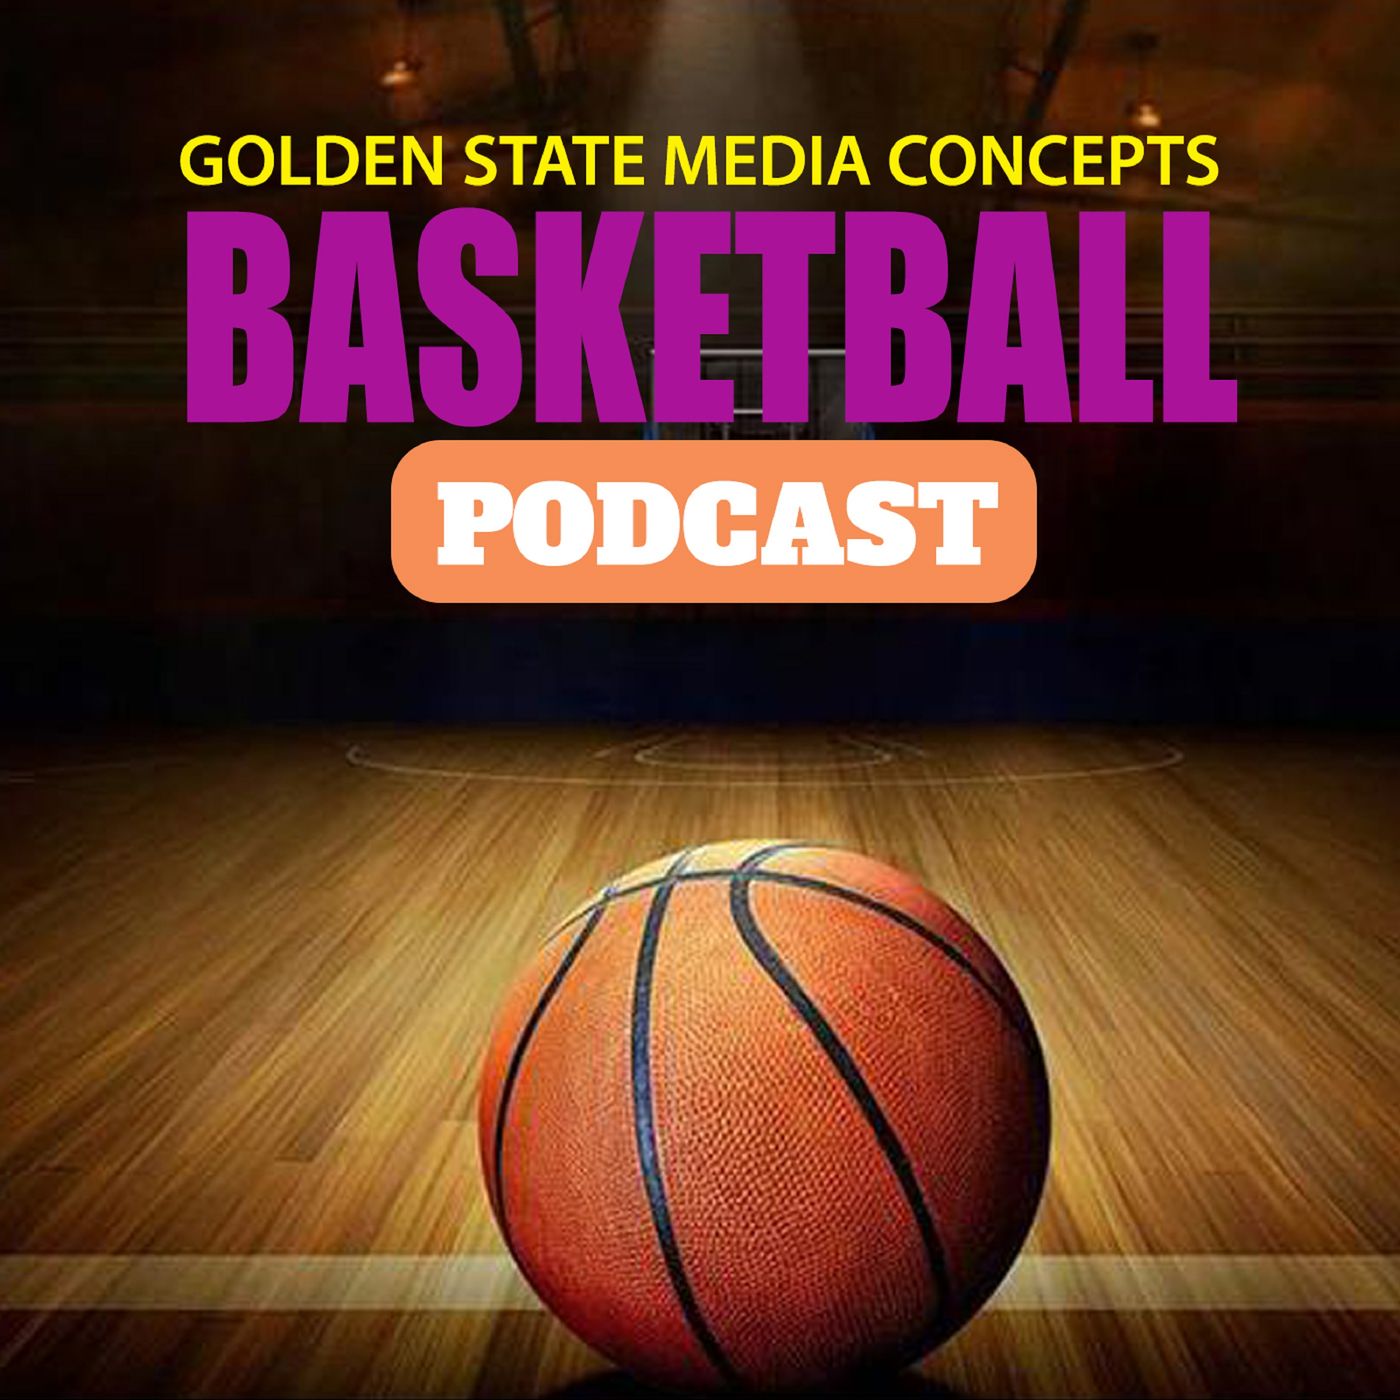 Celtics Take a Commanding Series Lead | GSMC Basketball Podcast